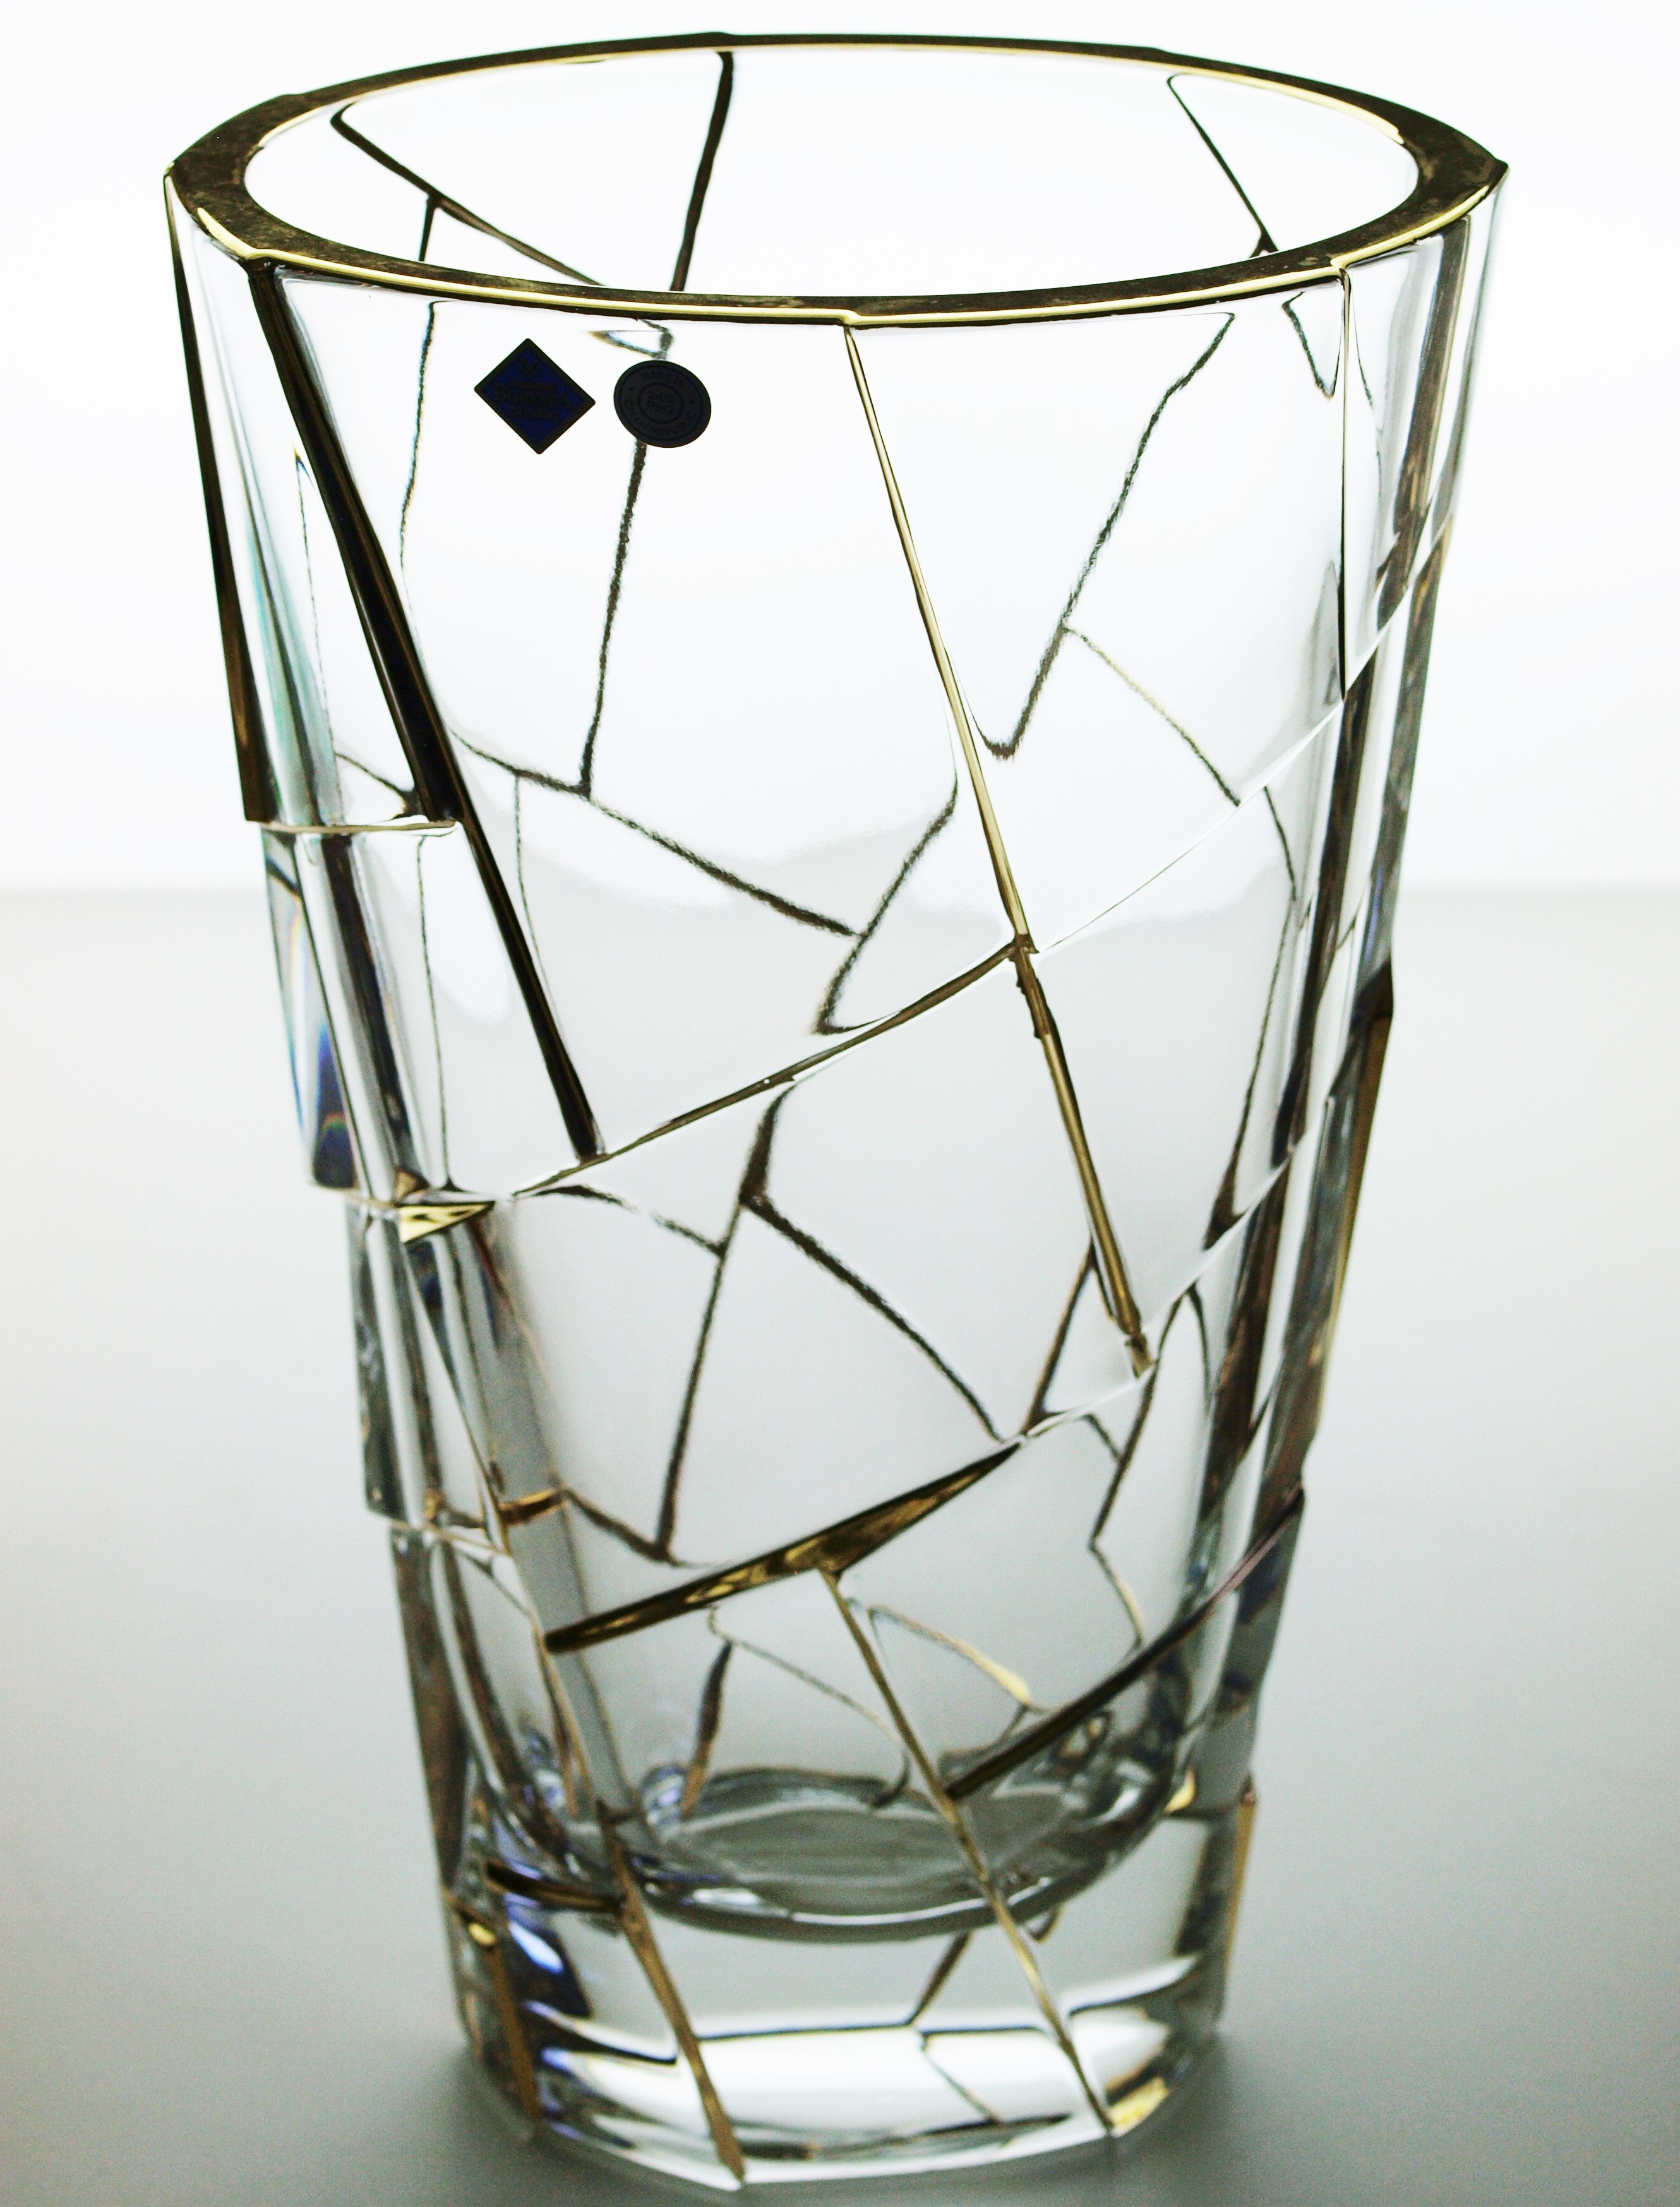 28 Awesome Short Glass Cylinder Vases 2022 free download short glass cylinder vases of gold glass vase with unique modern design made from full lead crystal inside glass vase crack gold